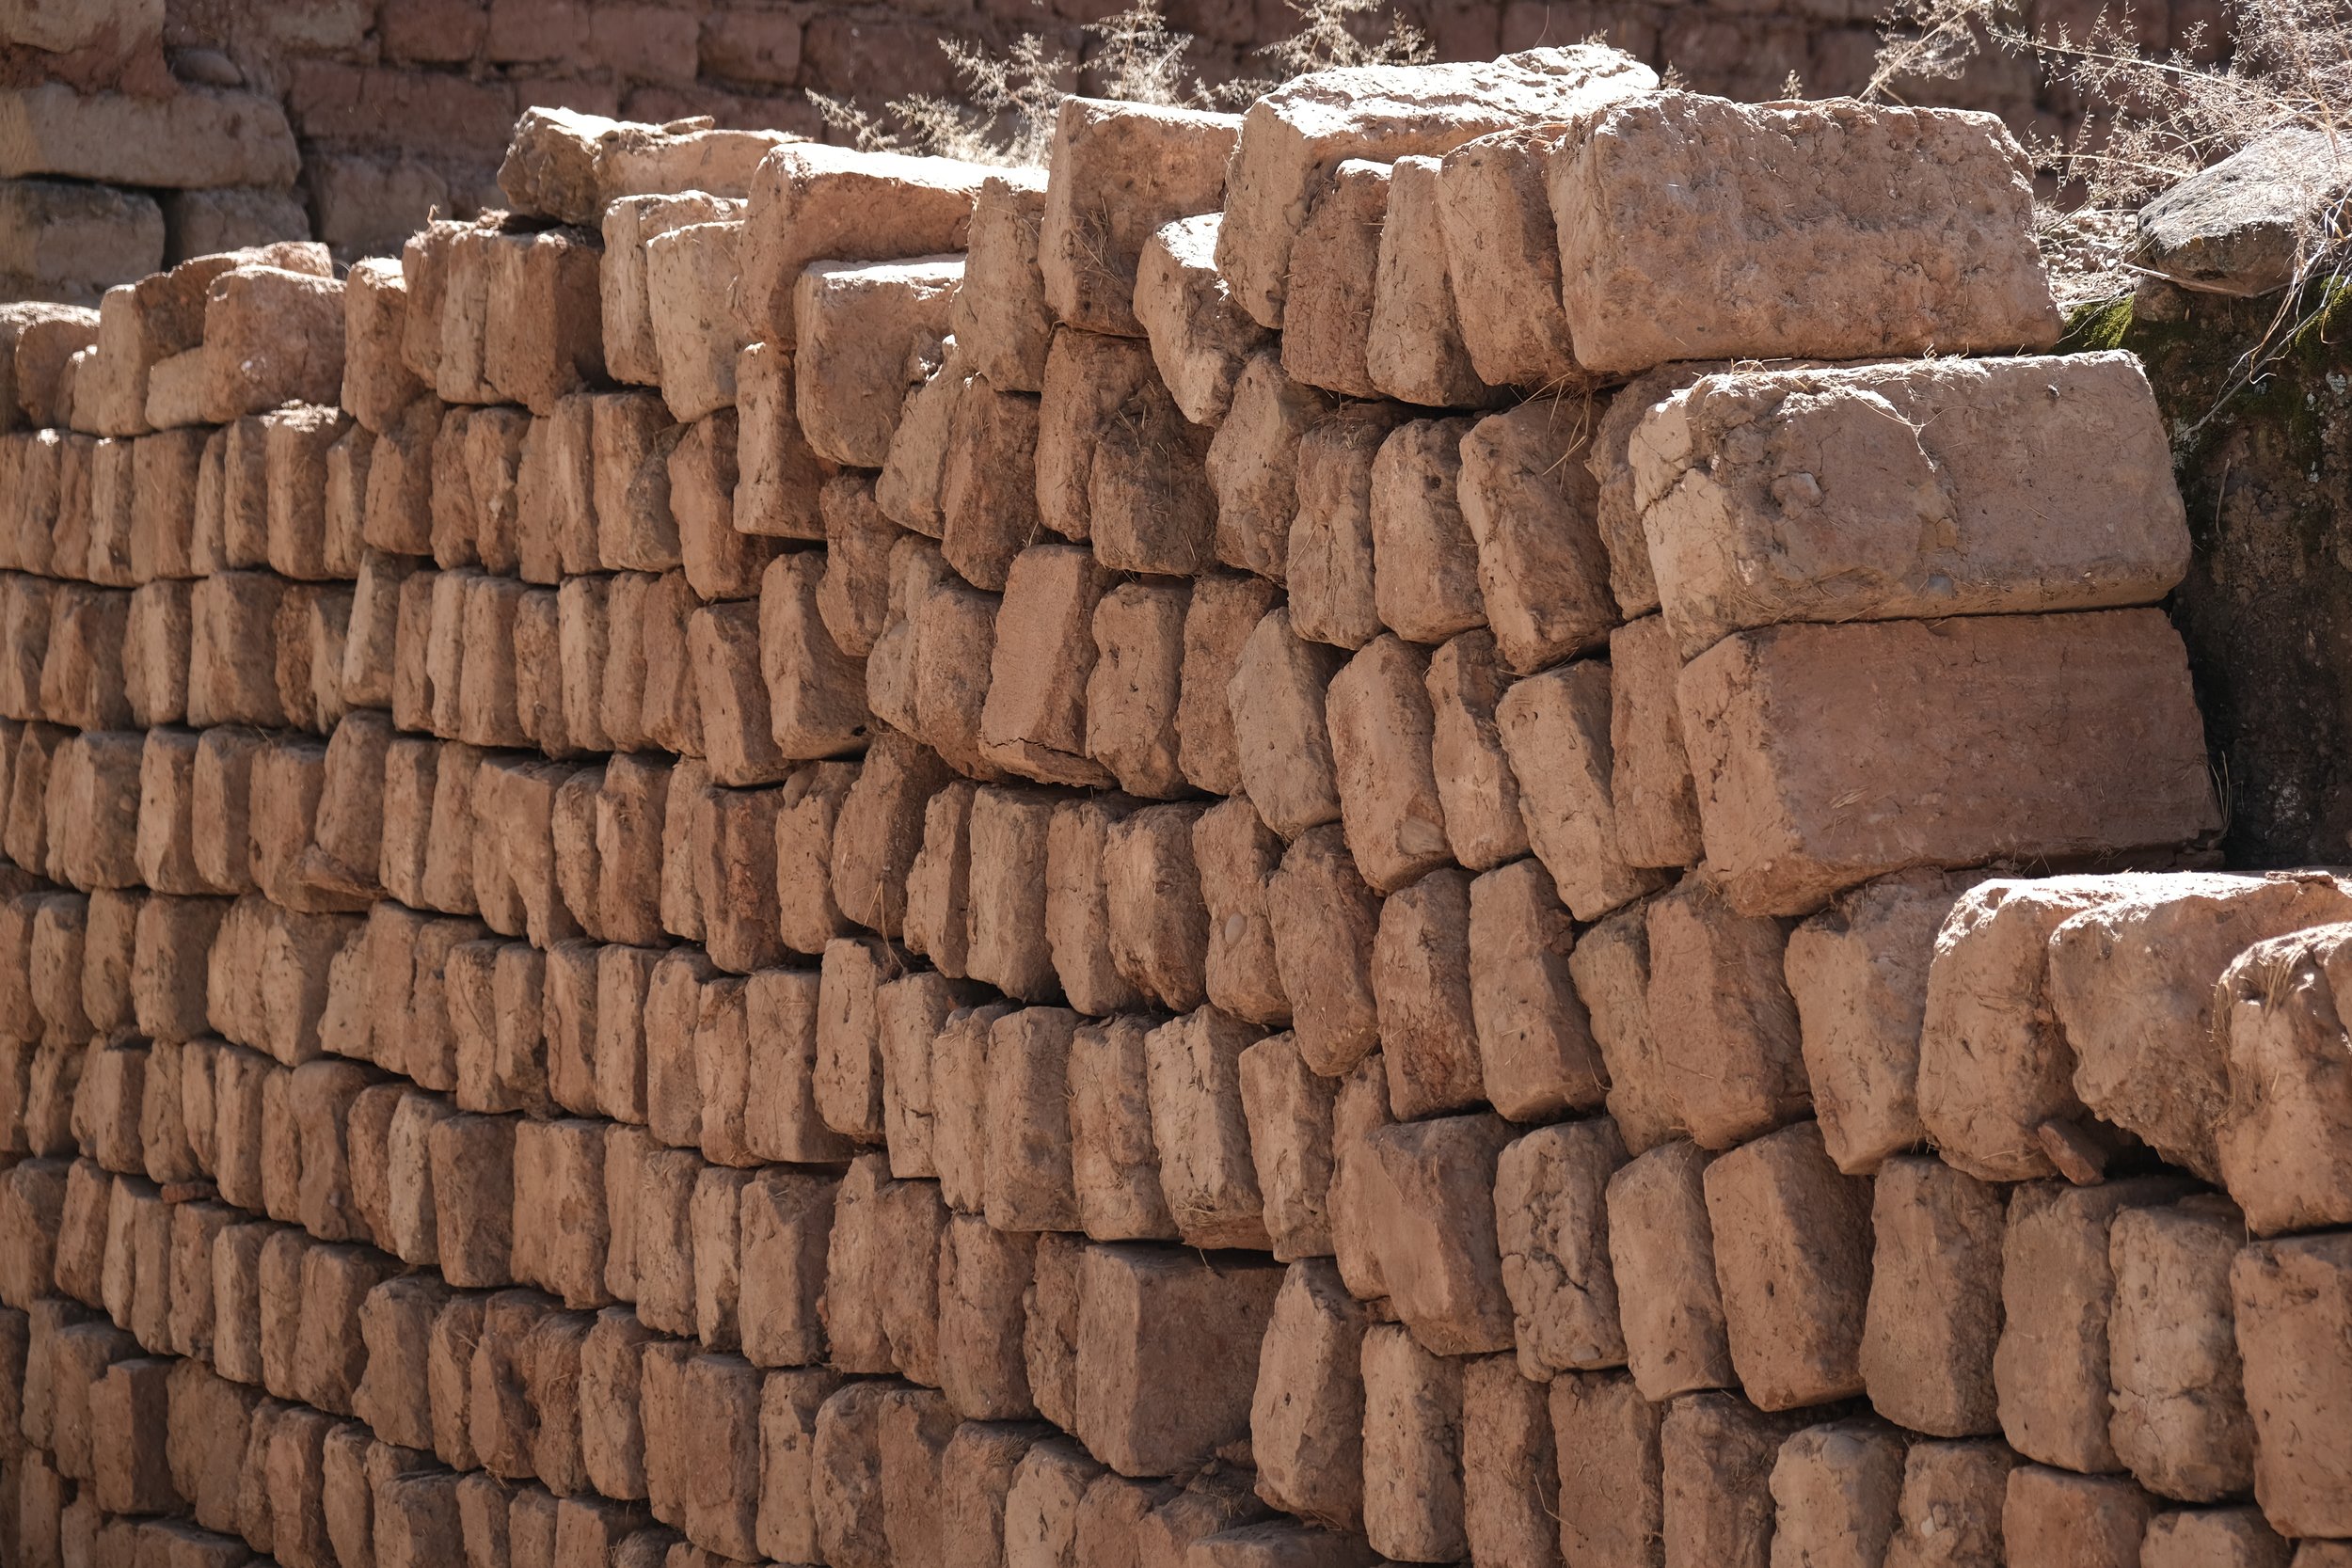 colour  Tucay adobe bricks drying.jpg